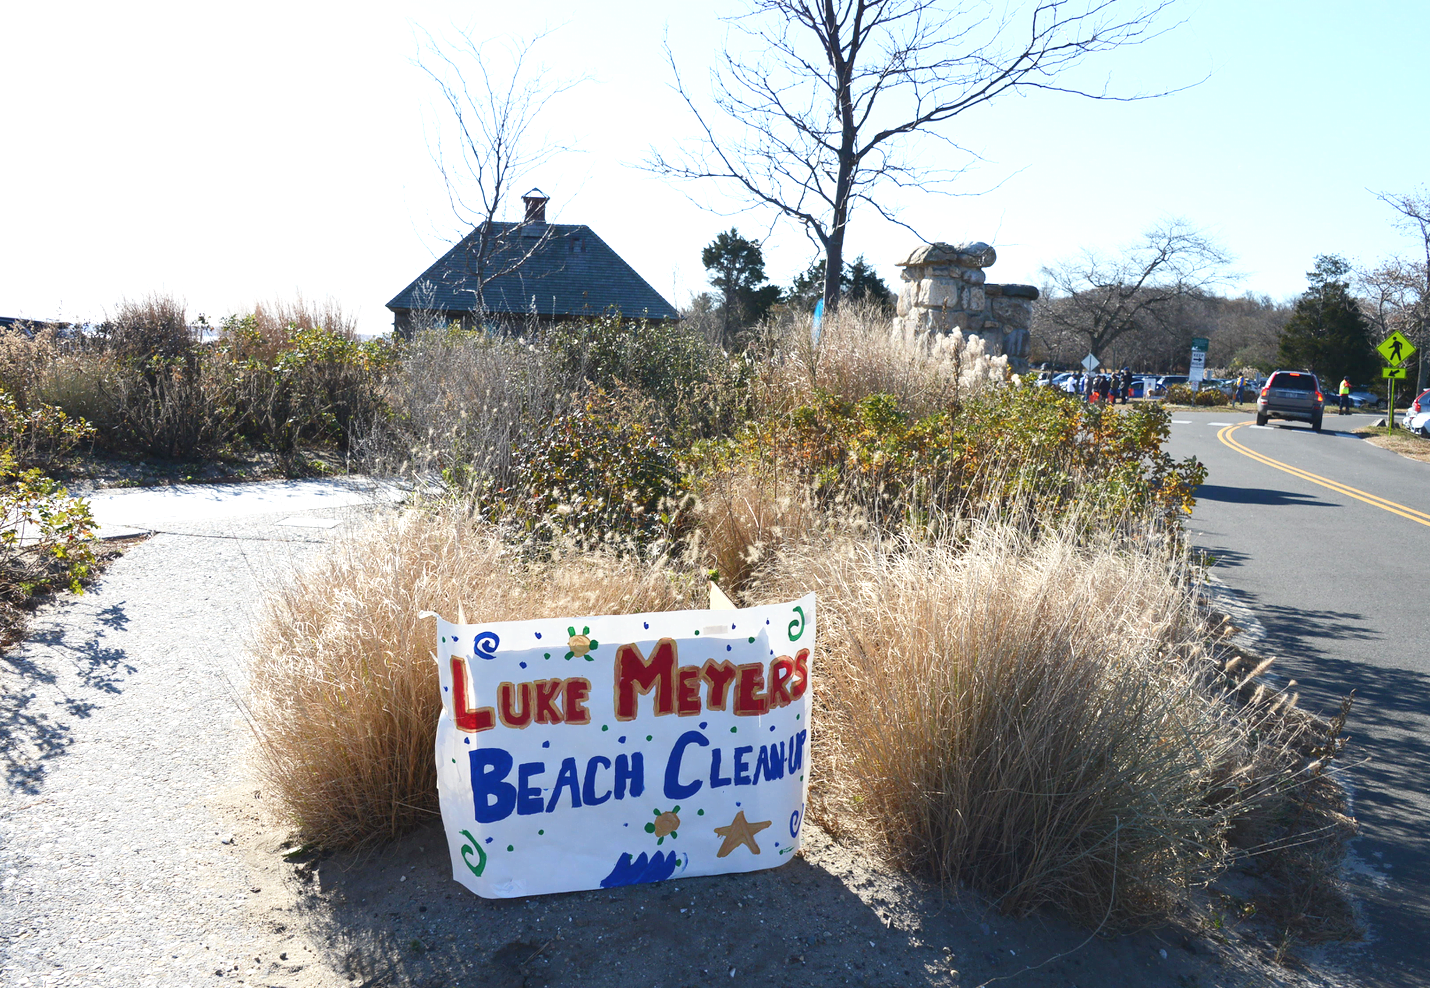 Luke Meyers beach clean up Saturday, Nov 16, 2019 contributed photo